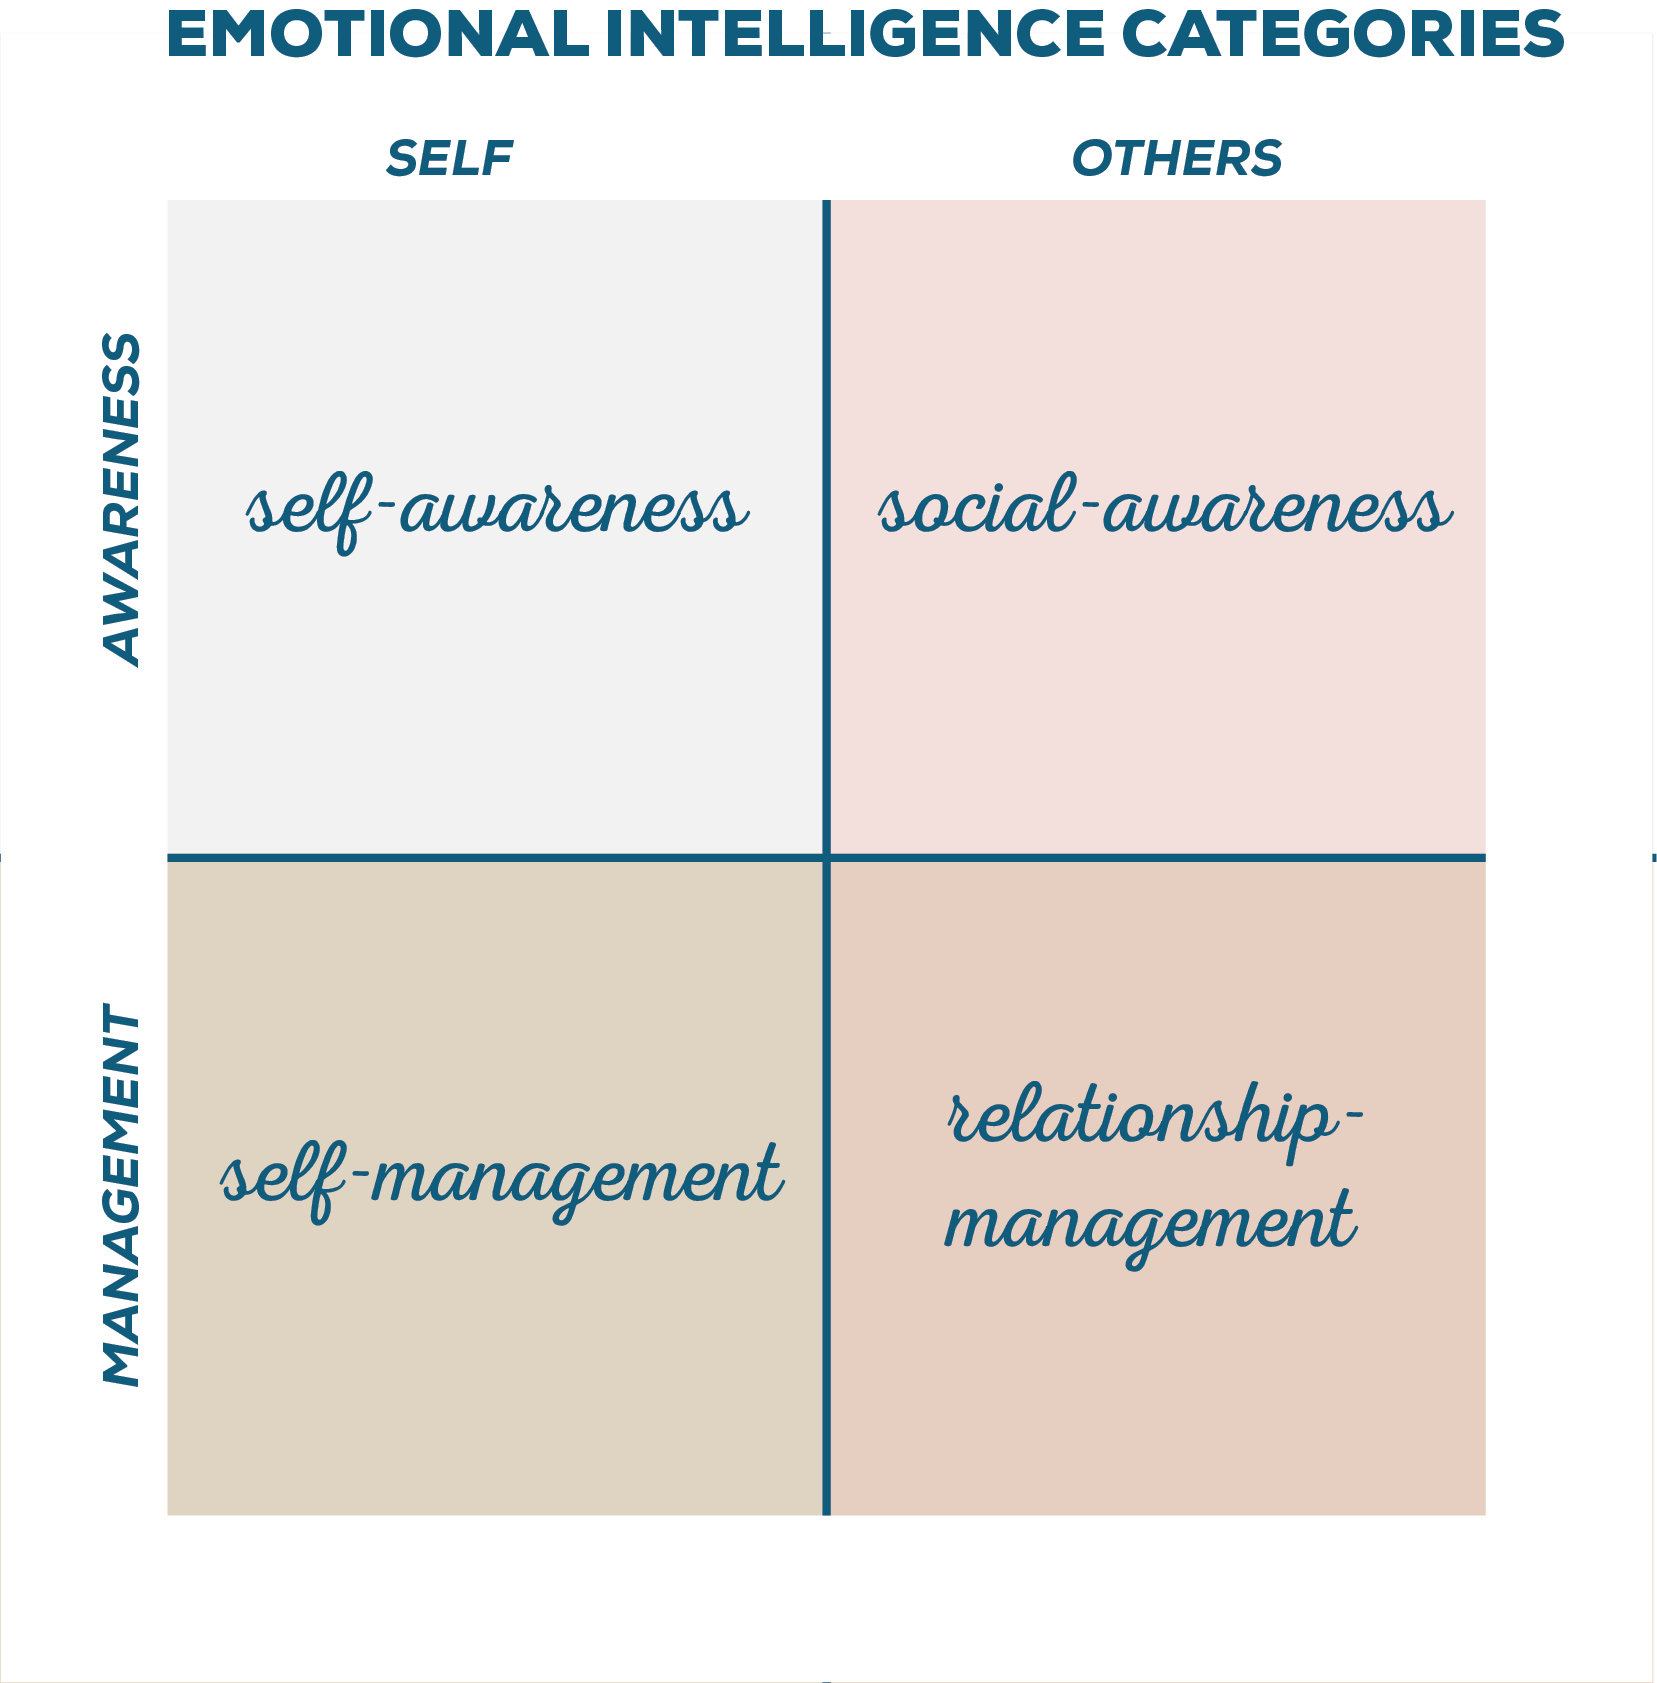 Emotional Intelligence categories